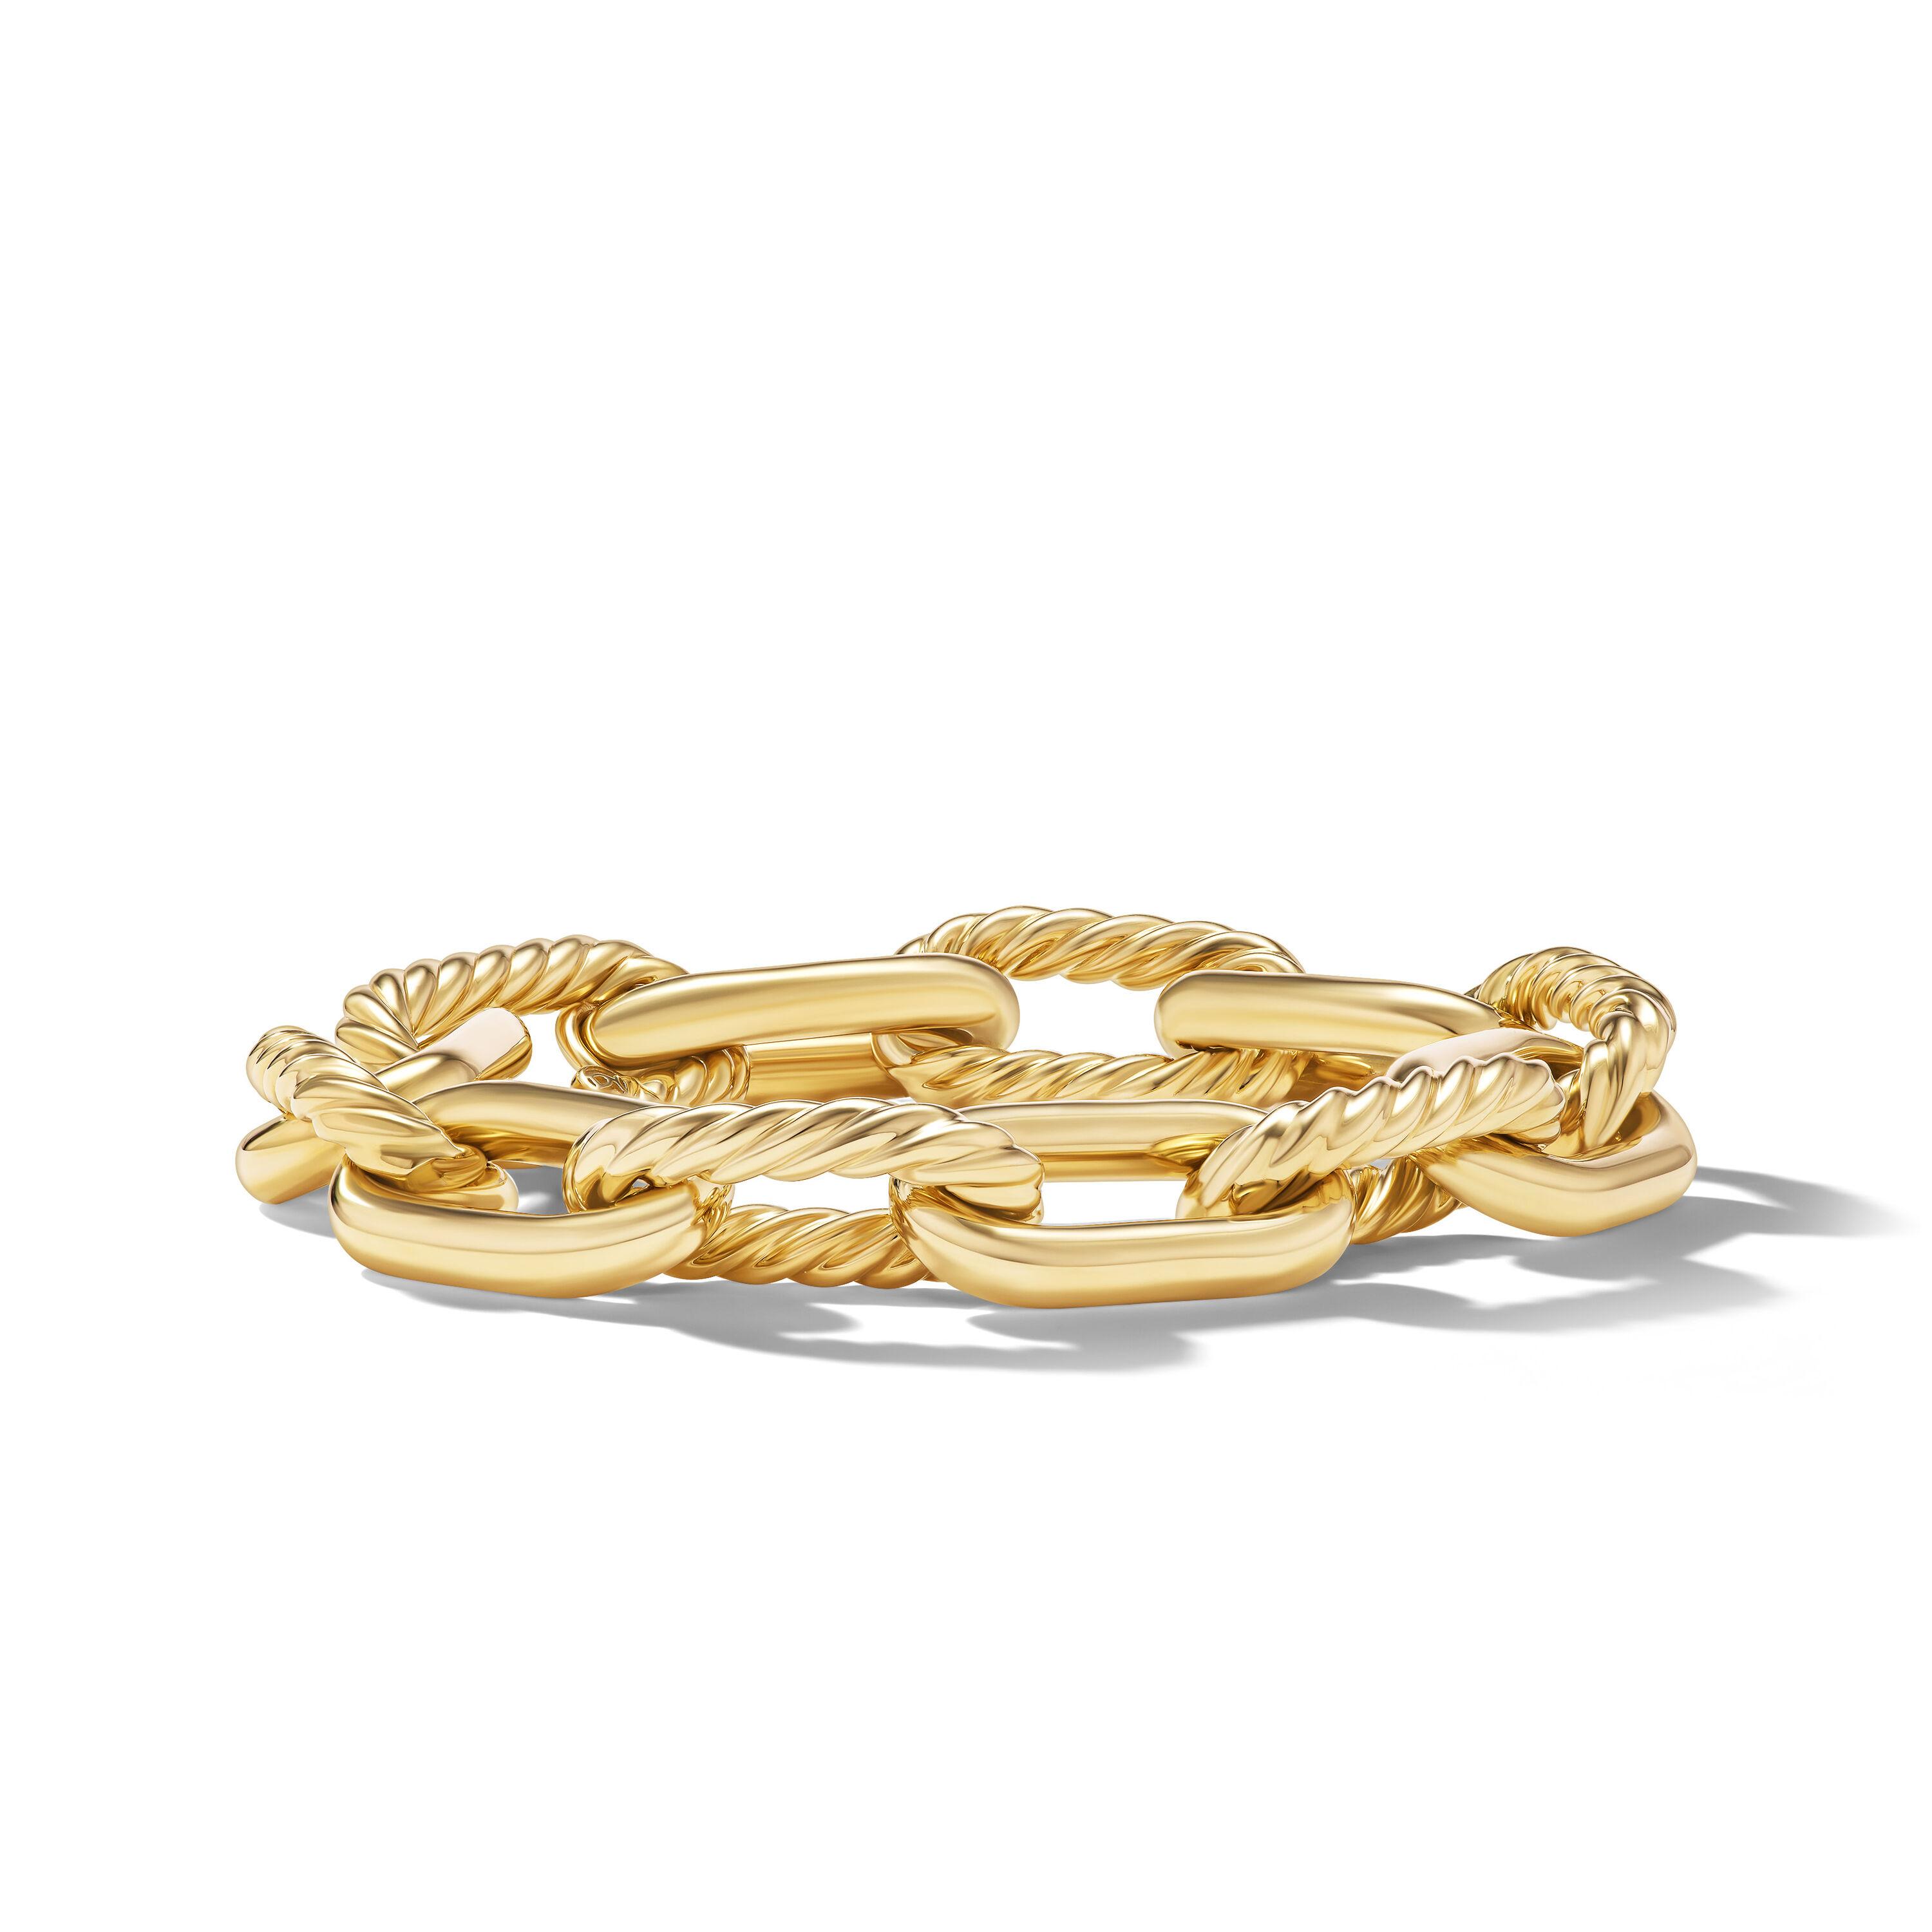 David Yurman 13.5mm Madison Chain Bracelet in 18k Yellow Gold, Size Large